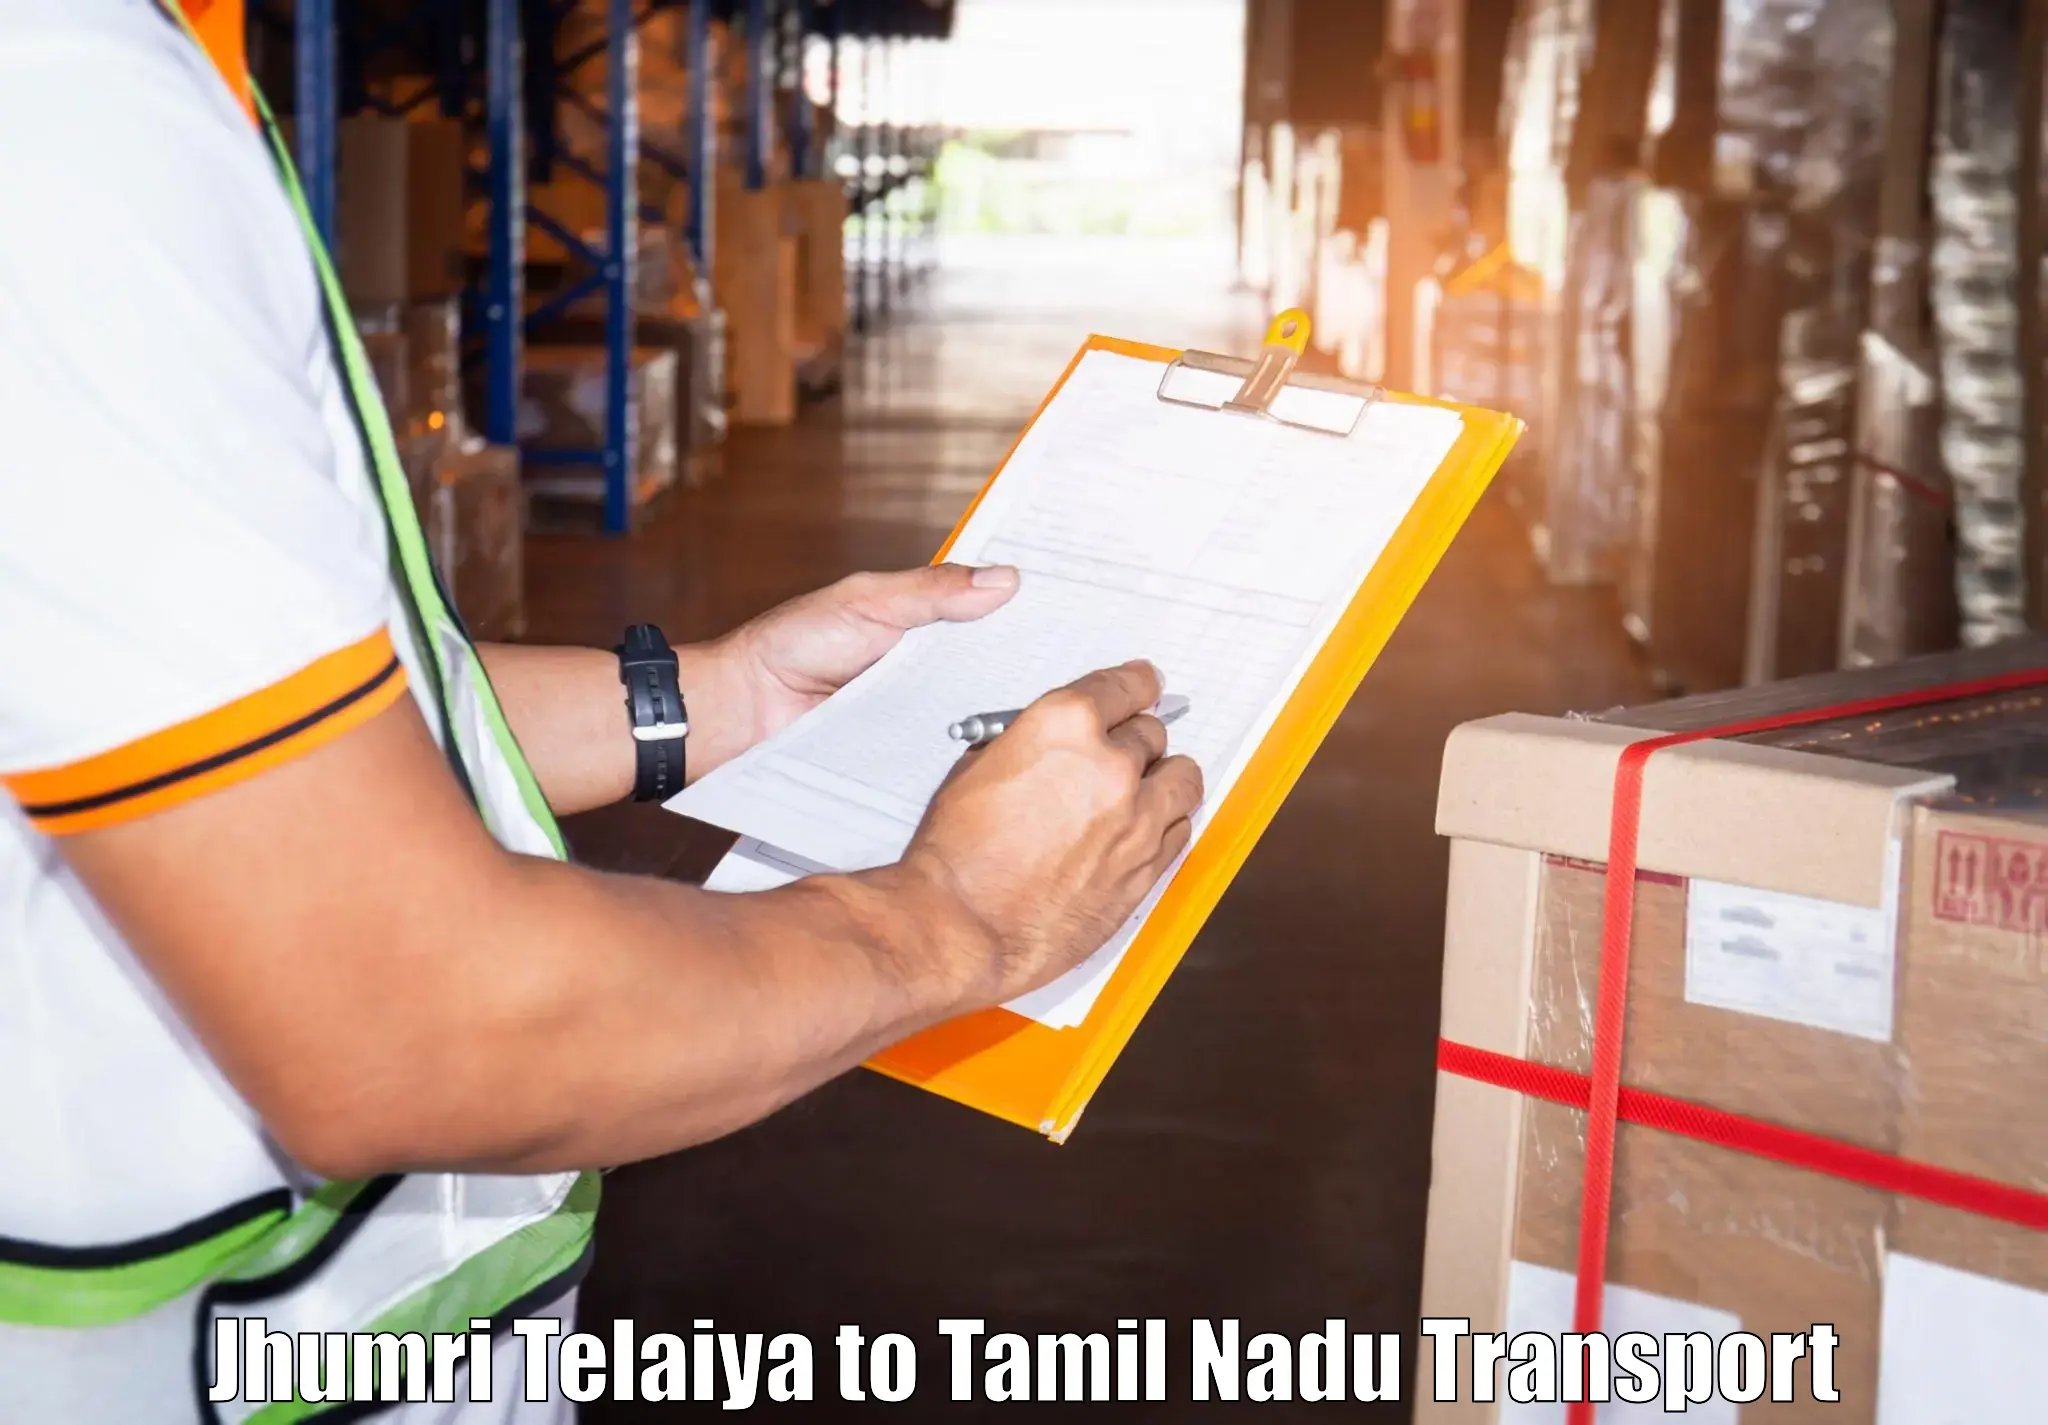 Truck transport companies in India Jhumri Telaiya to Vellore